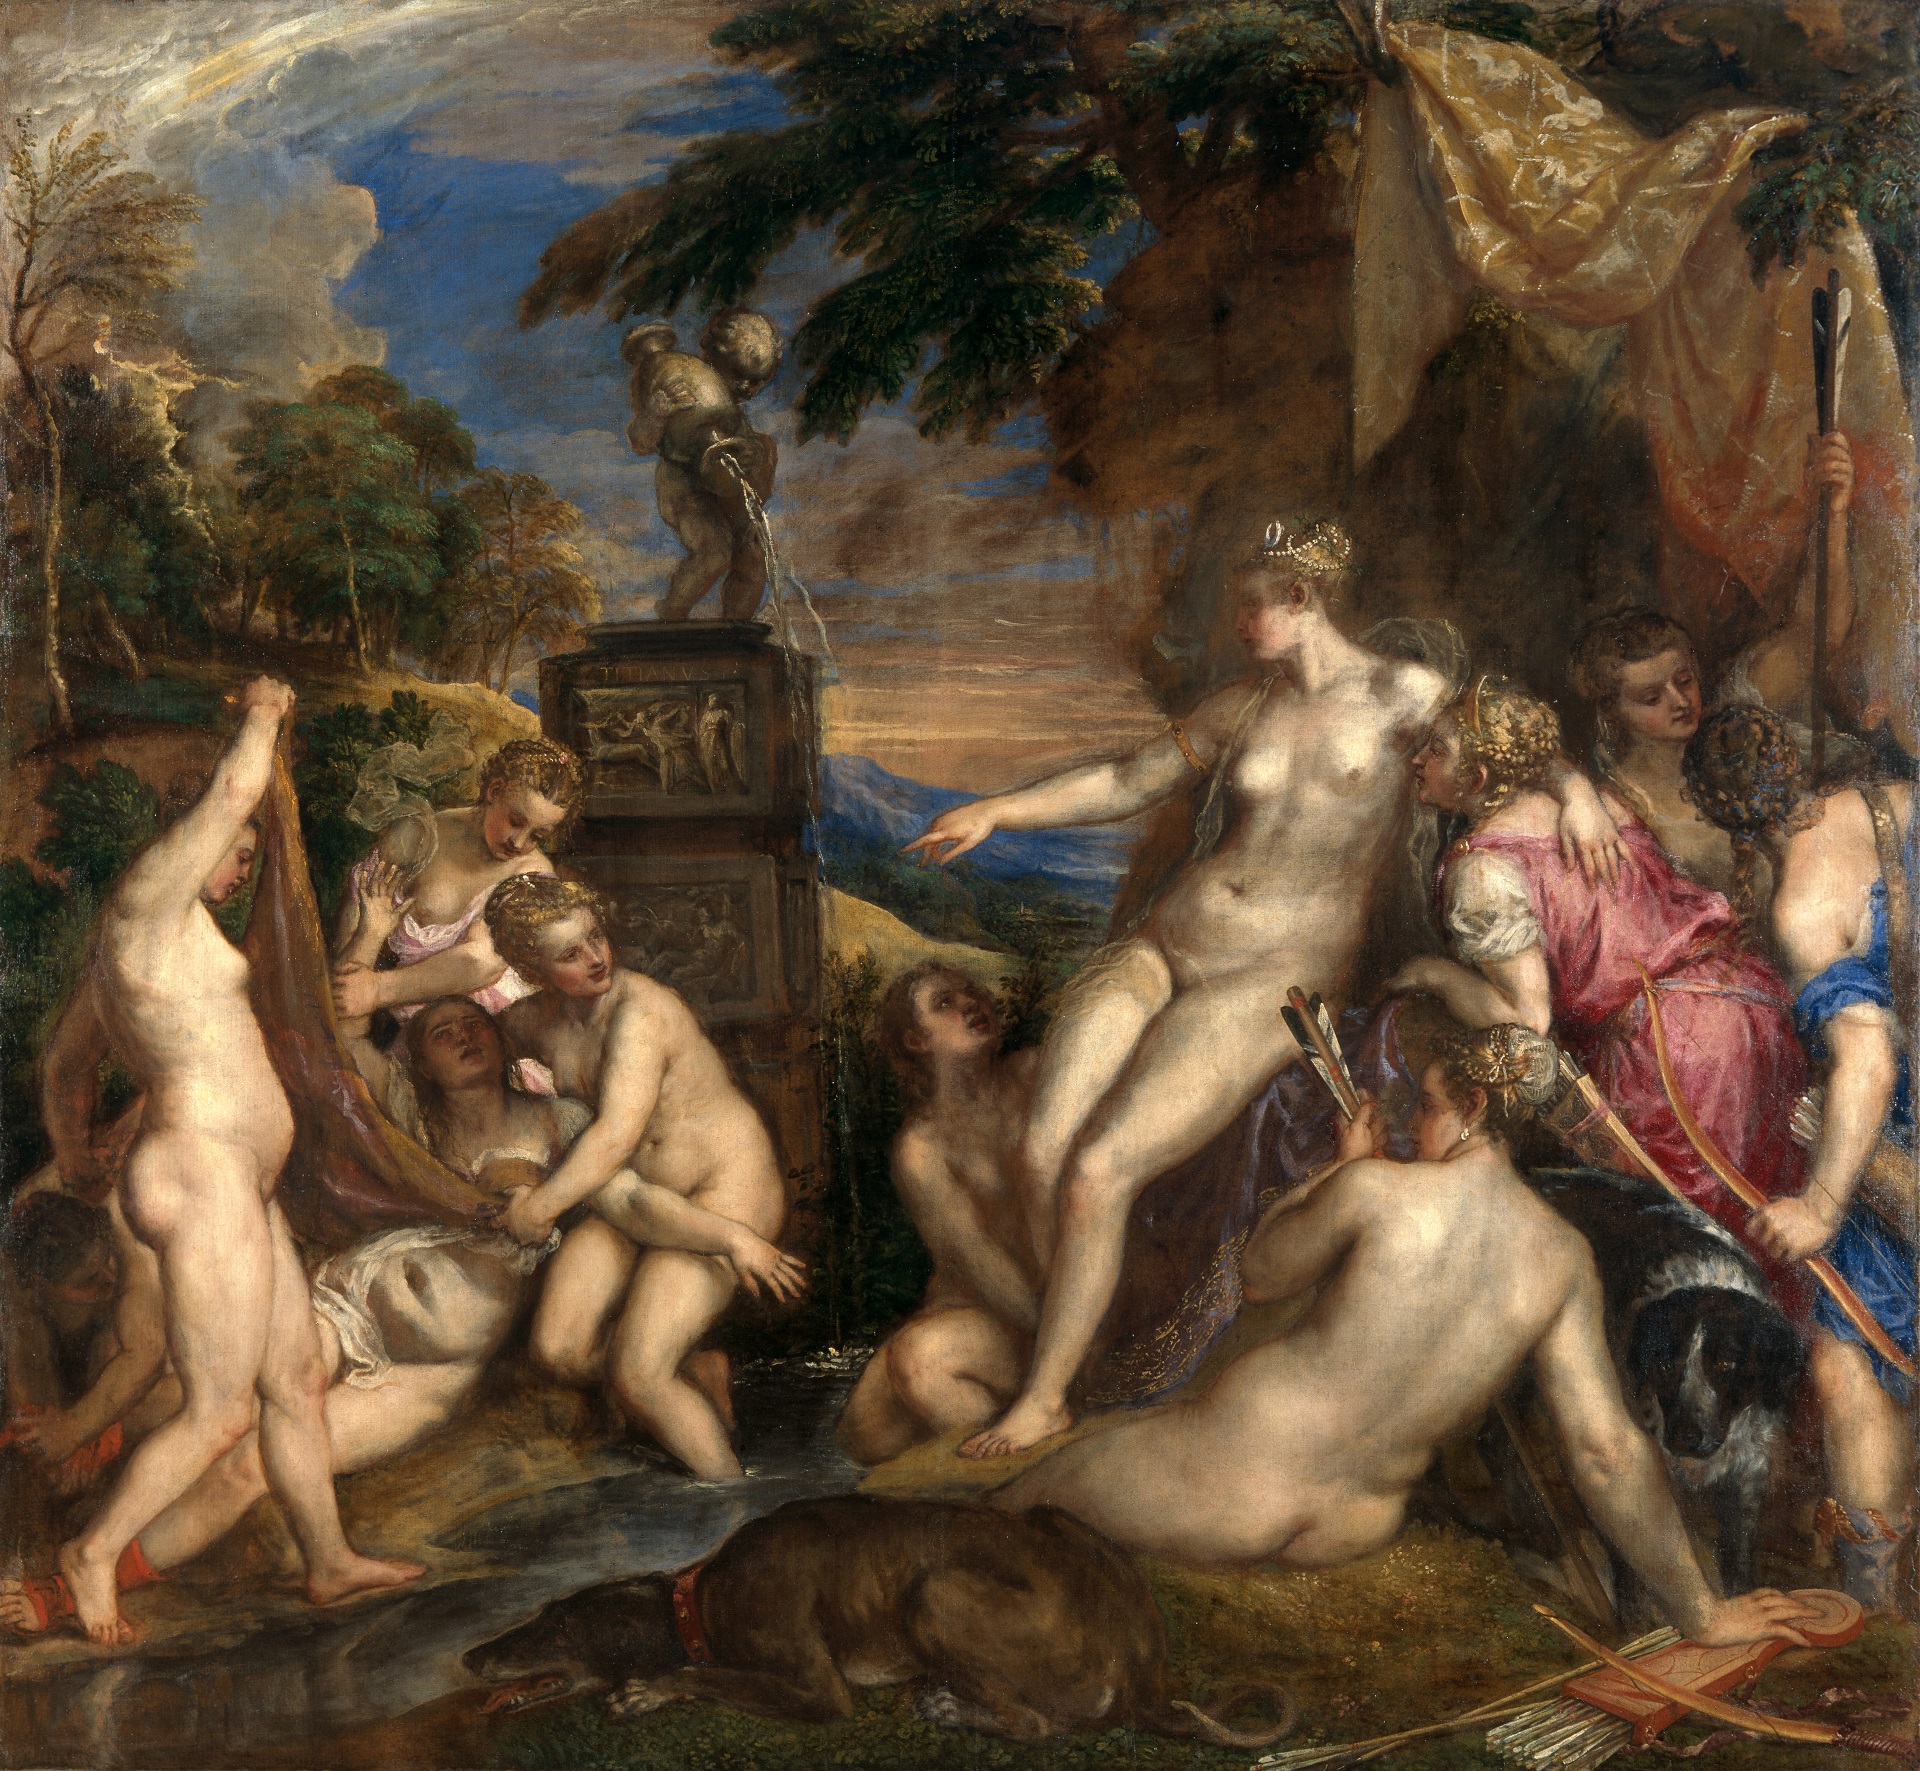 Titian - Diana and Callisto 1556-1559